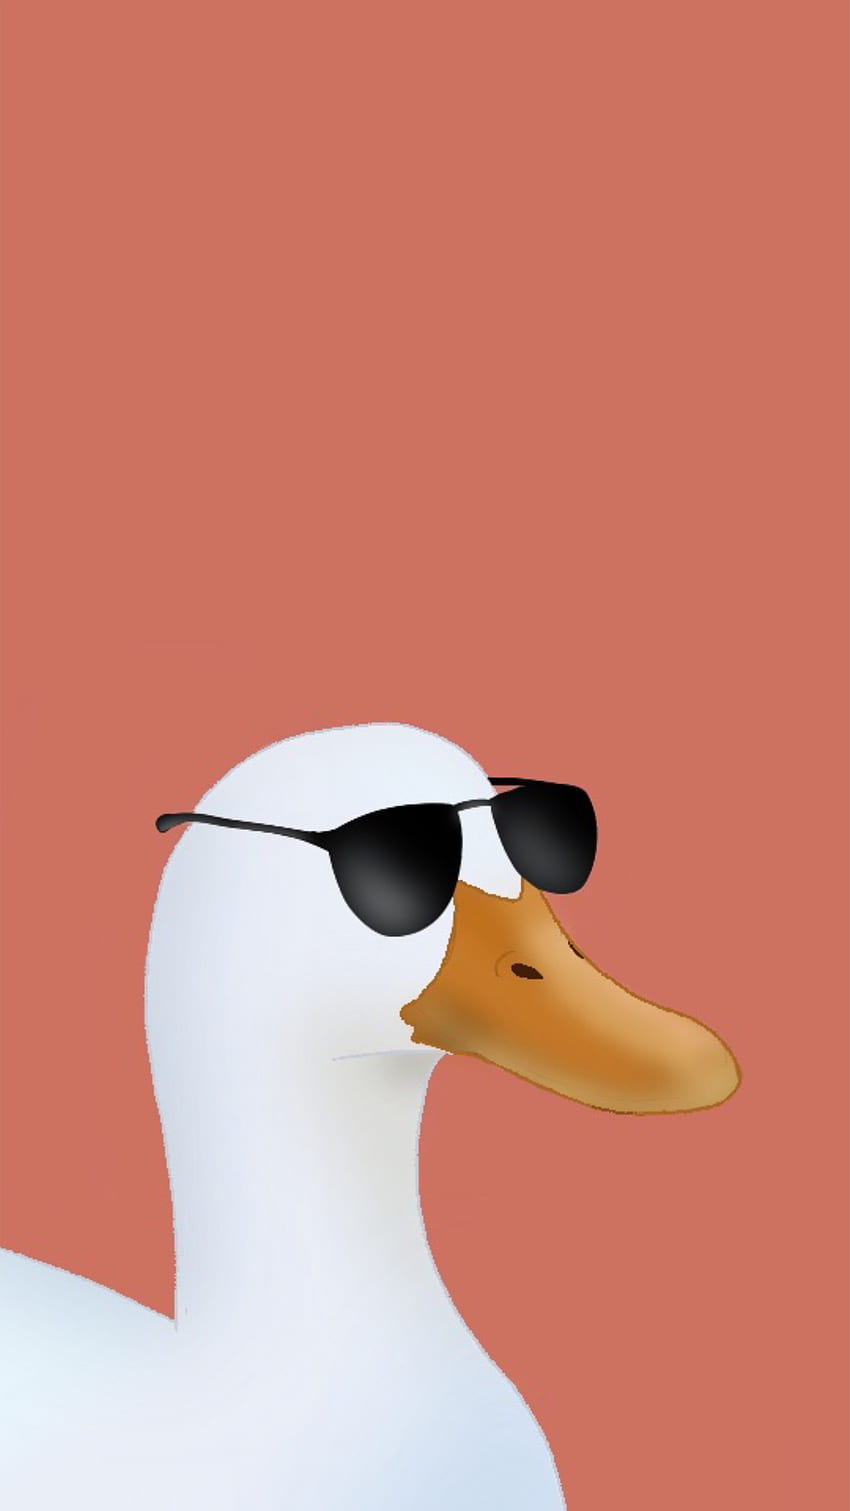 Bebek dengan kacamata hitam, nyaman, binatang, lucu wallpaper ponsel HD